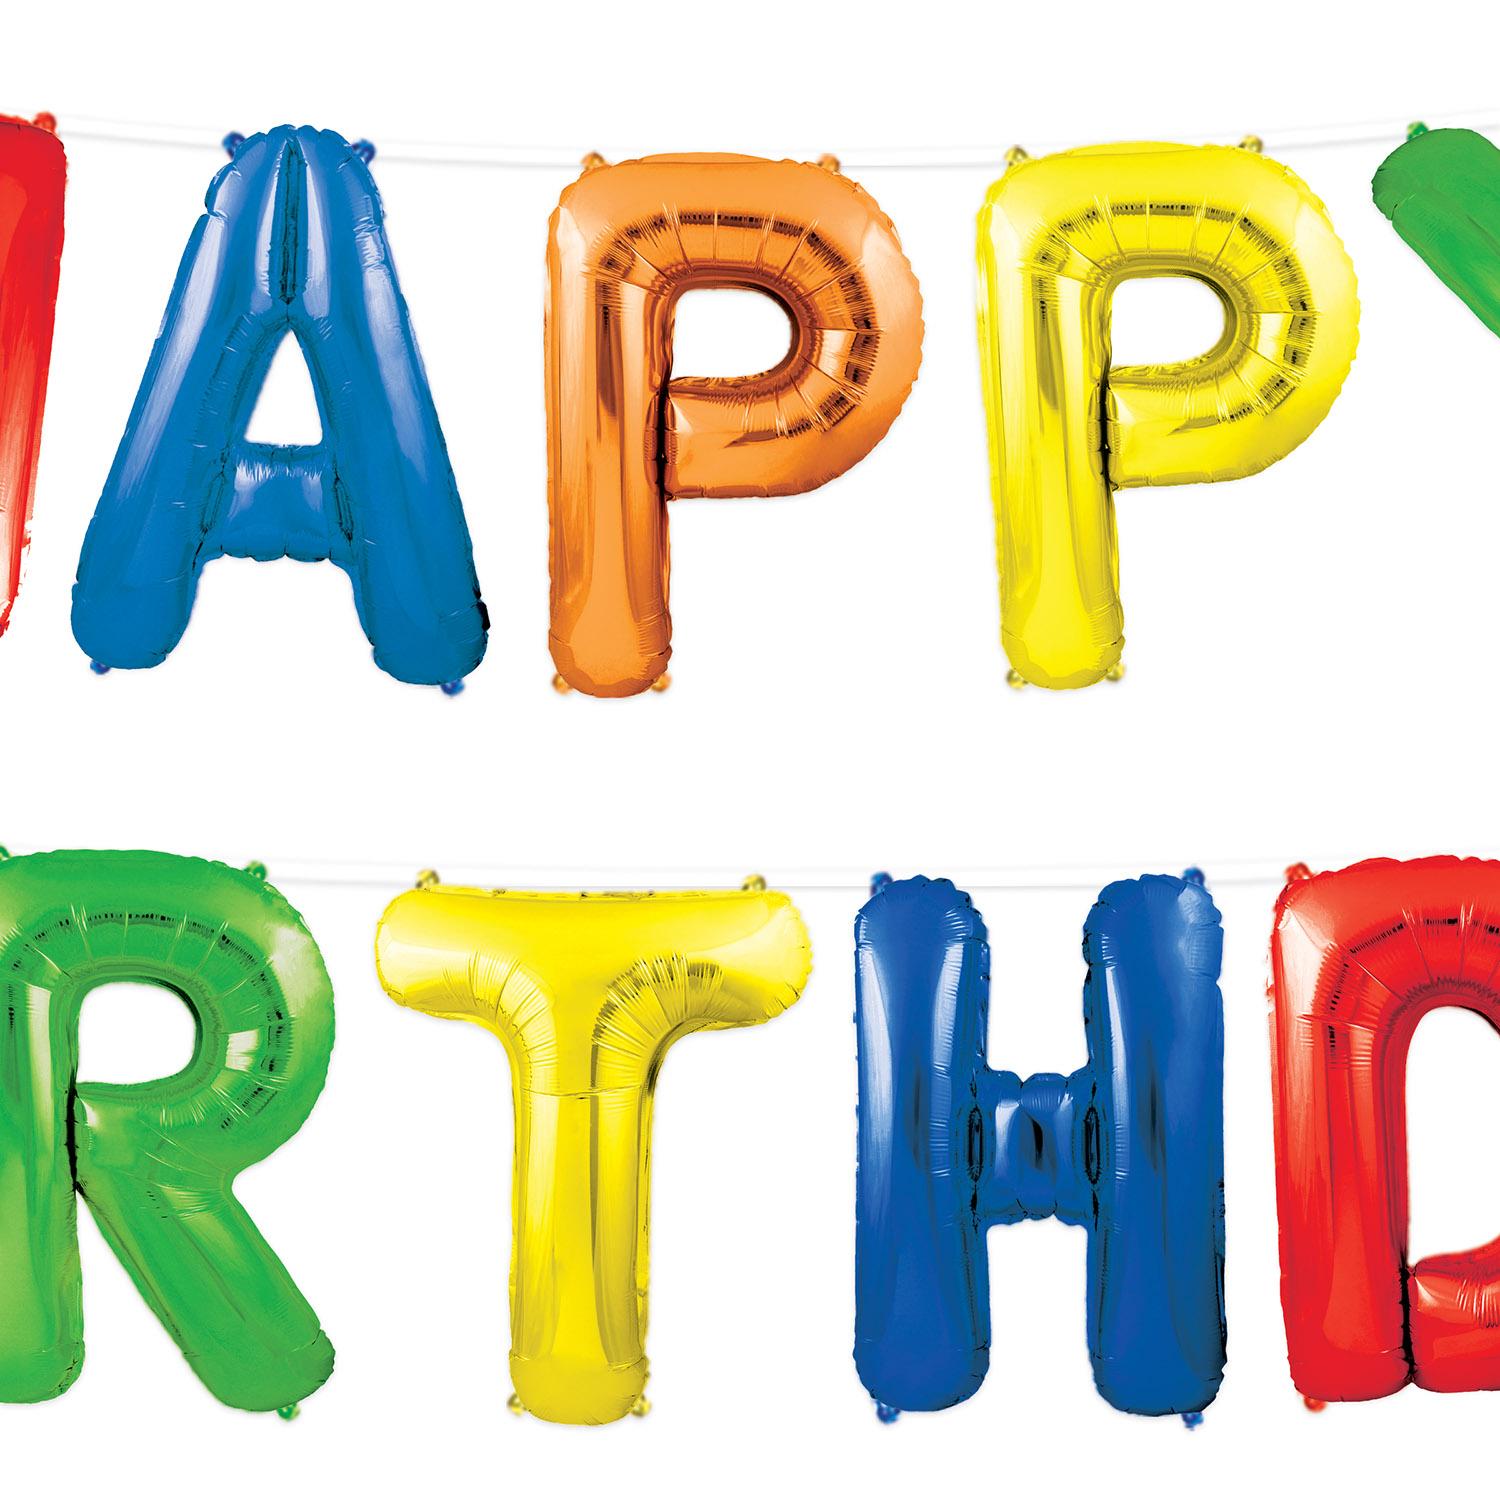 Beistle Happy Birthday Party Balloon Streamer - Multi-Color